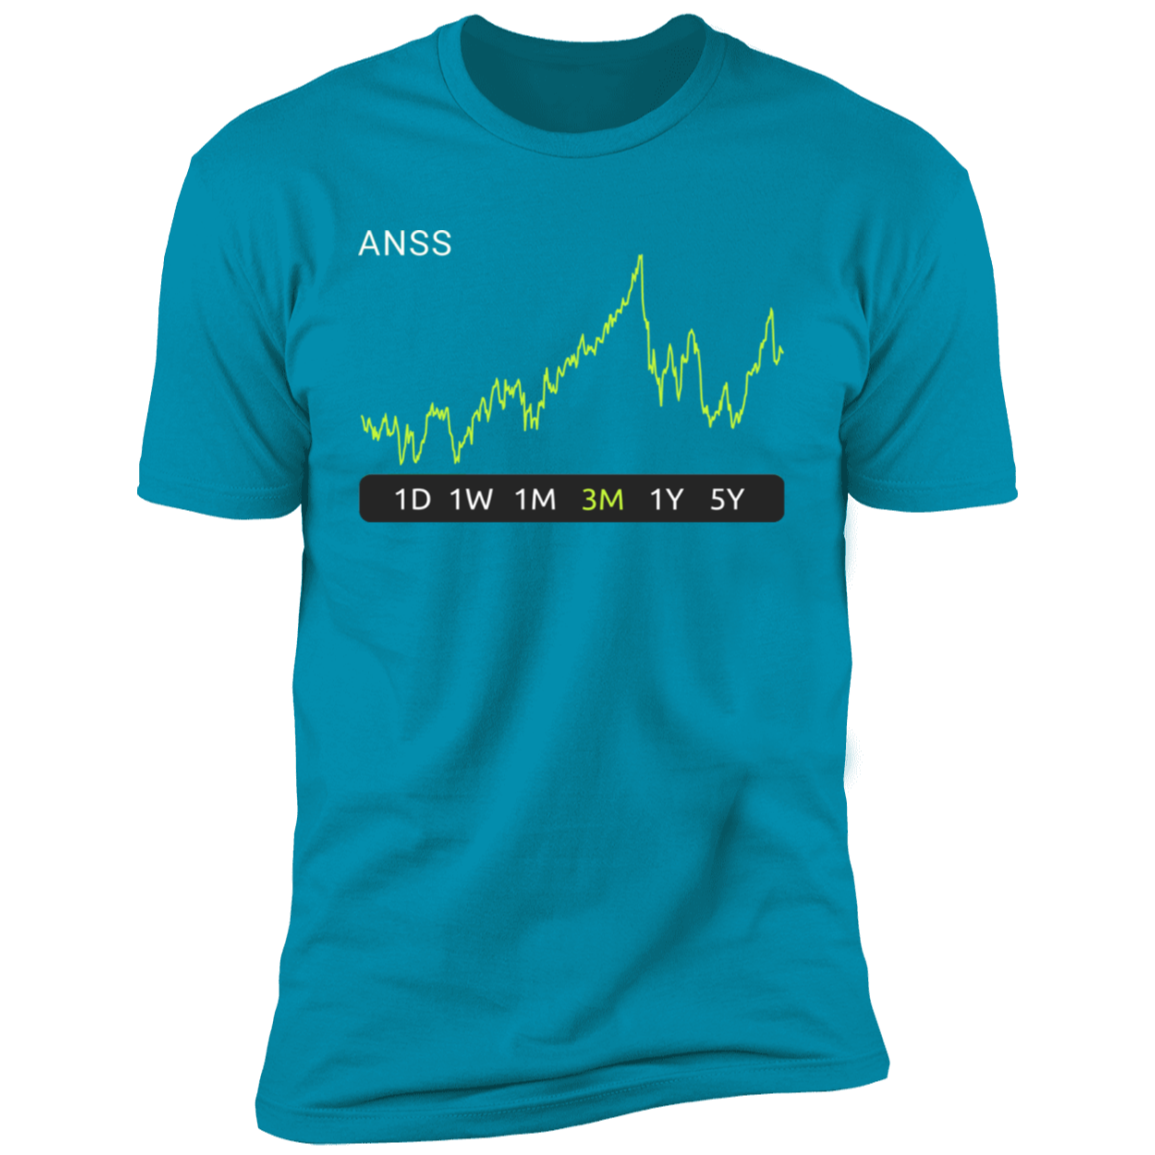 ANSS Stock 3m Premium T-Shirt